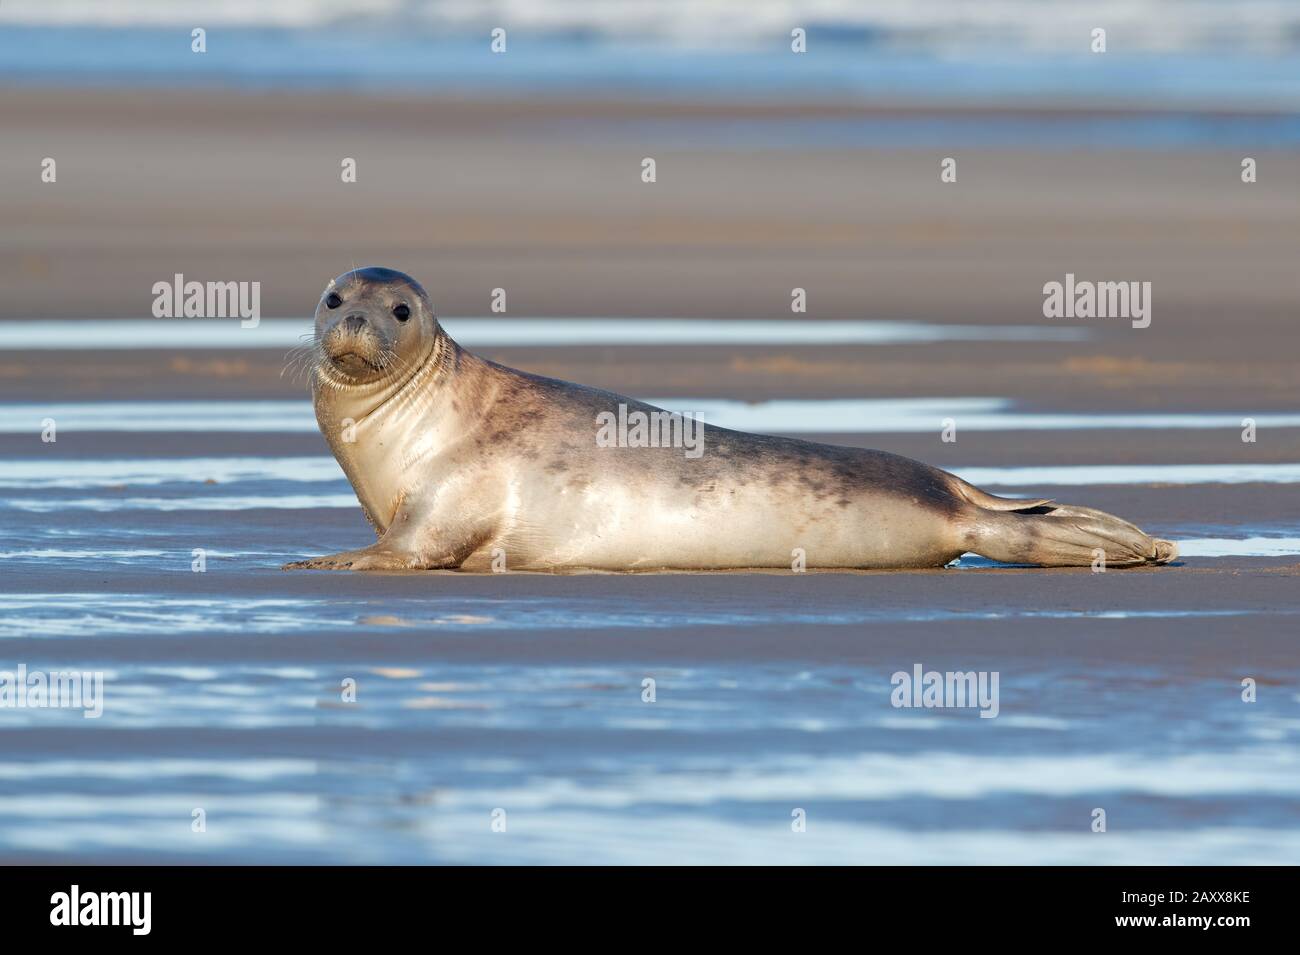 Harbor Seal (Phoca vitulina) at the edge of the ocean Stock Photo